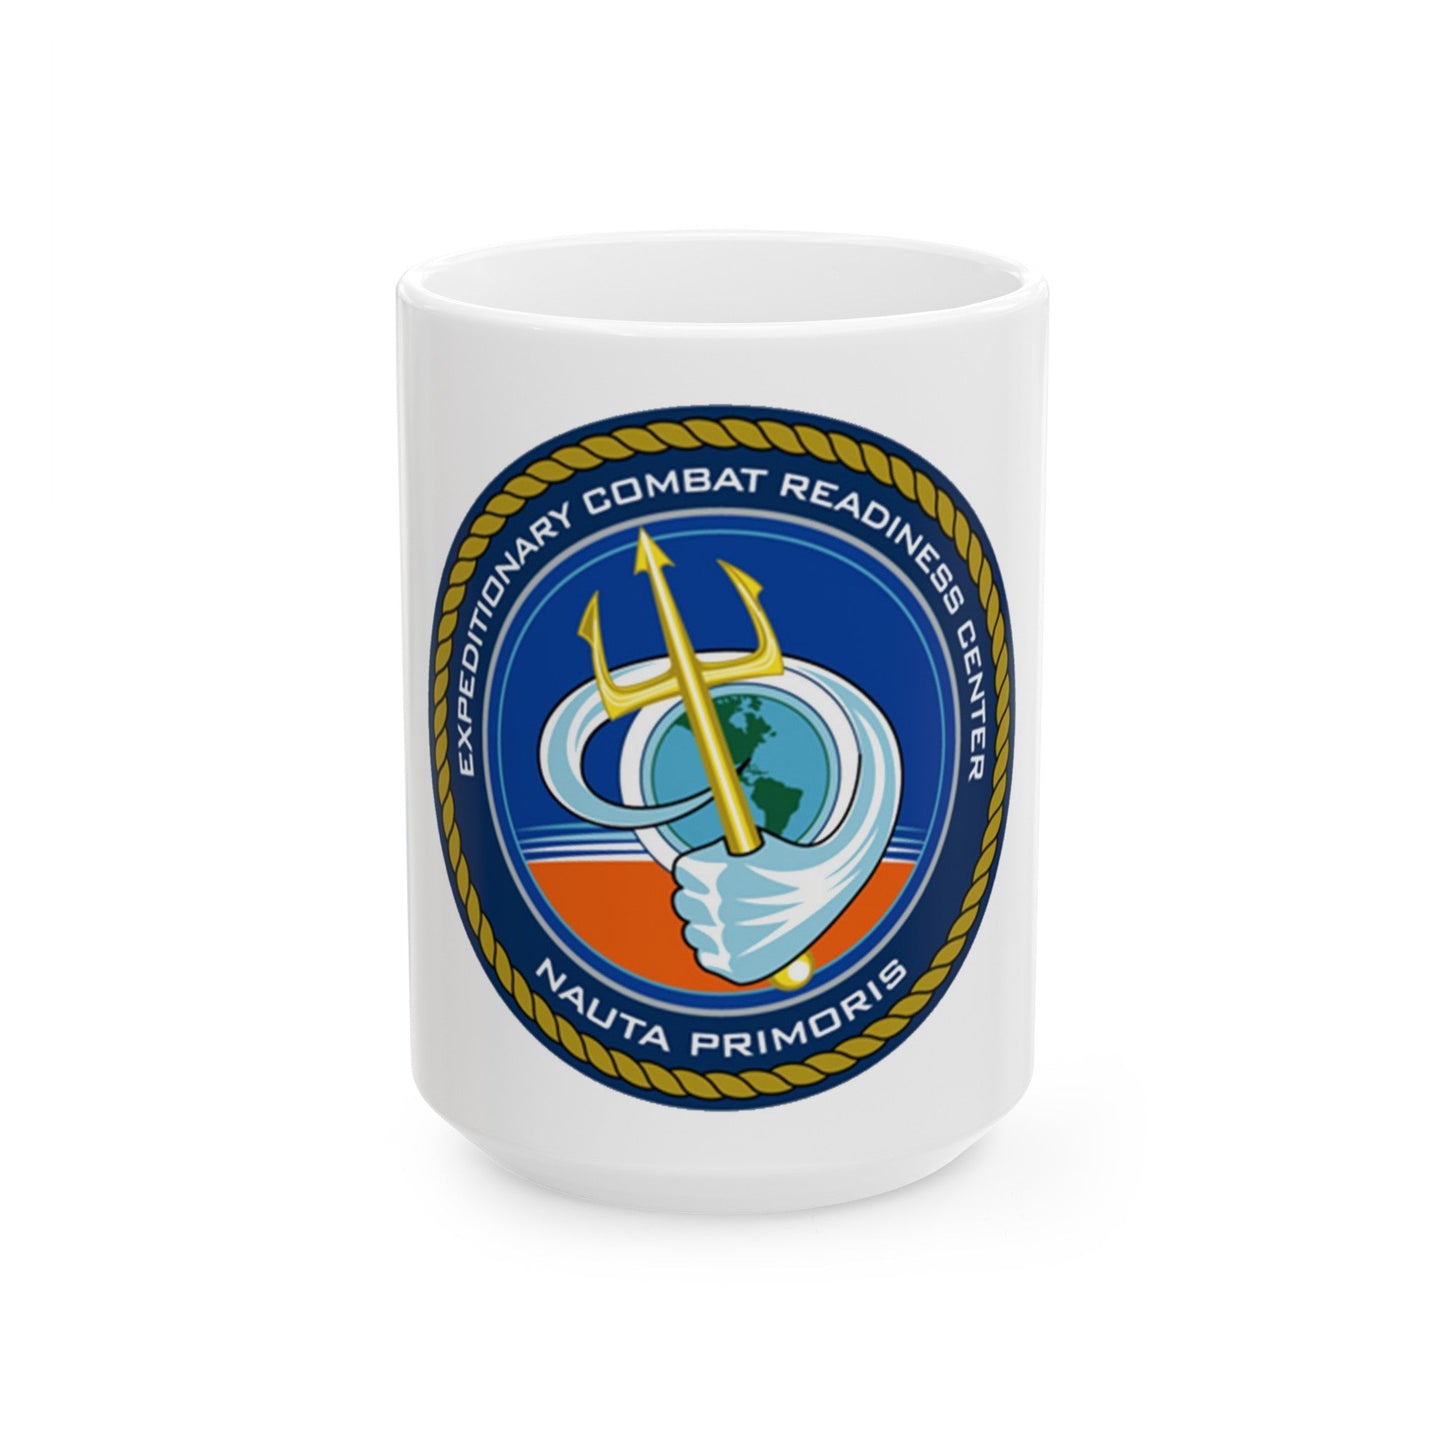 ECRC Nauta Primoris Expeditionary Combat Readiness (U.S. Navy) White Coffee Mug-15oz-The Sticker Space